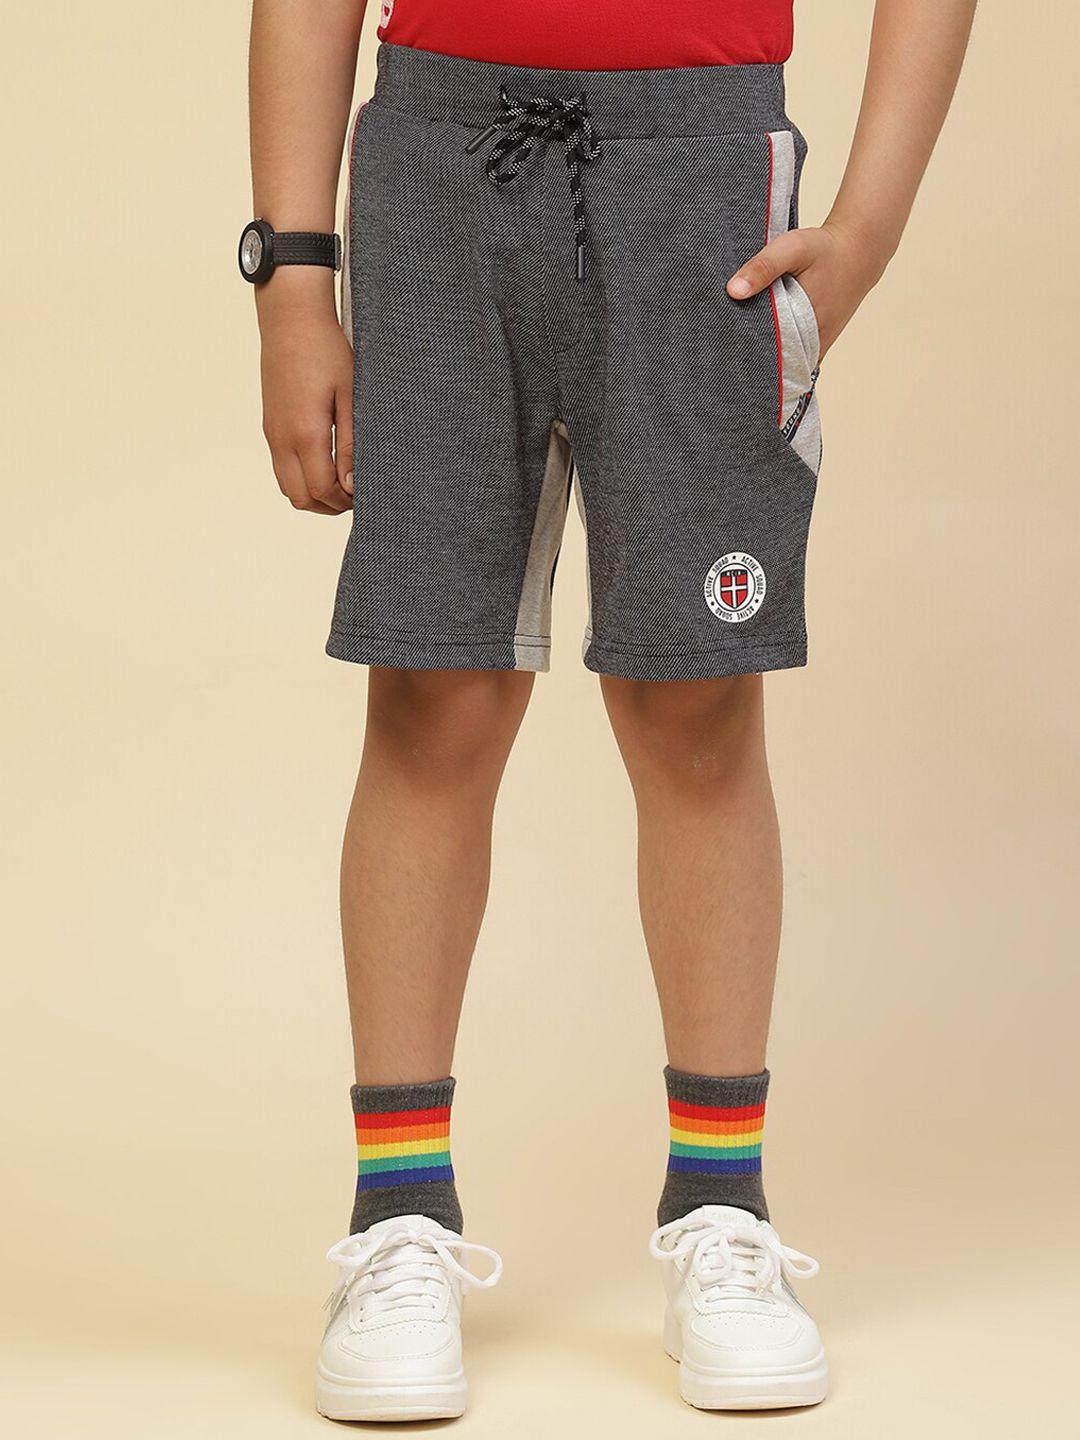 monte-carlo-boys-micro-ditsy-printed-sports-shorts